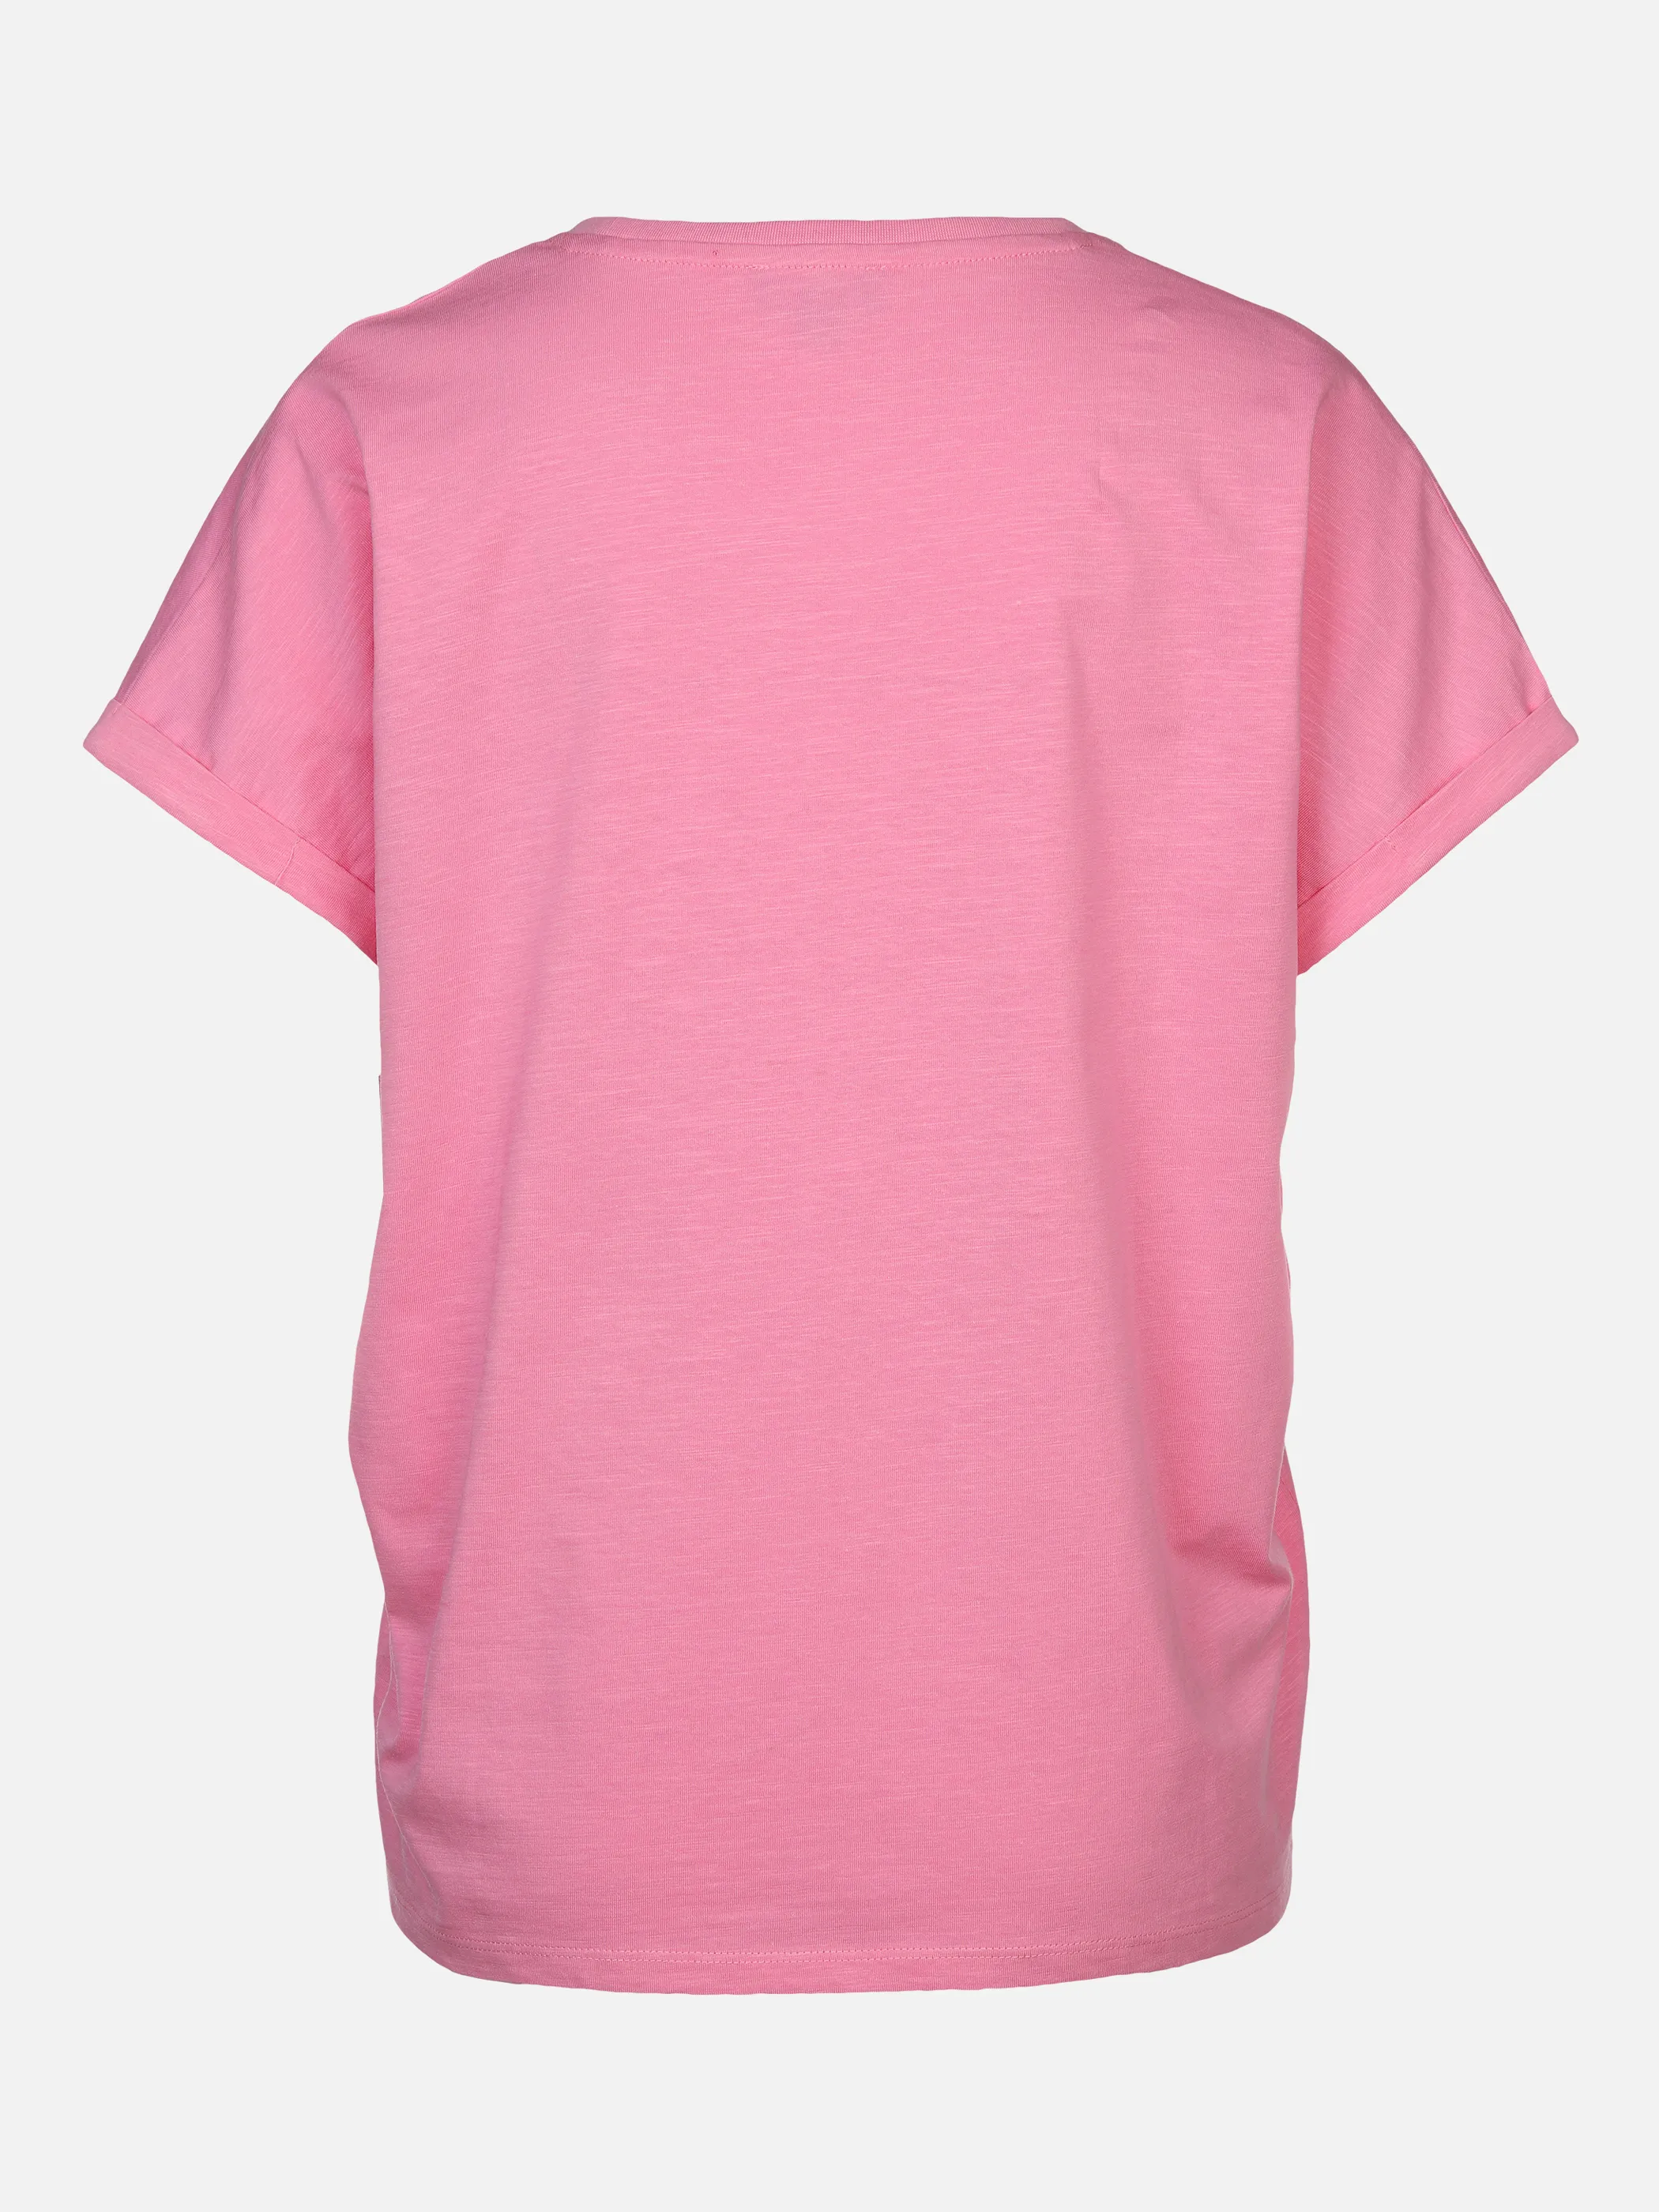 Sure Da-T-Shirt m. Frontartwork Pink 873372 FLAMINGO 2